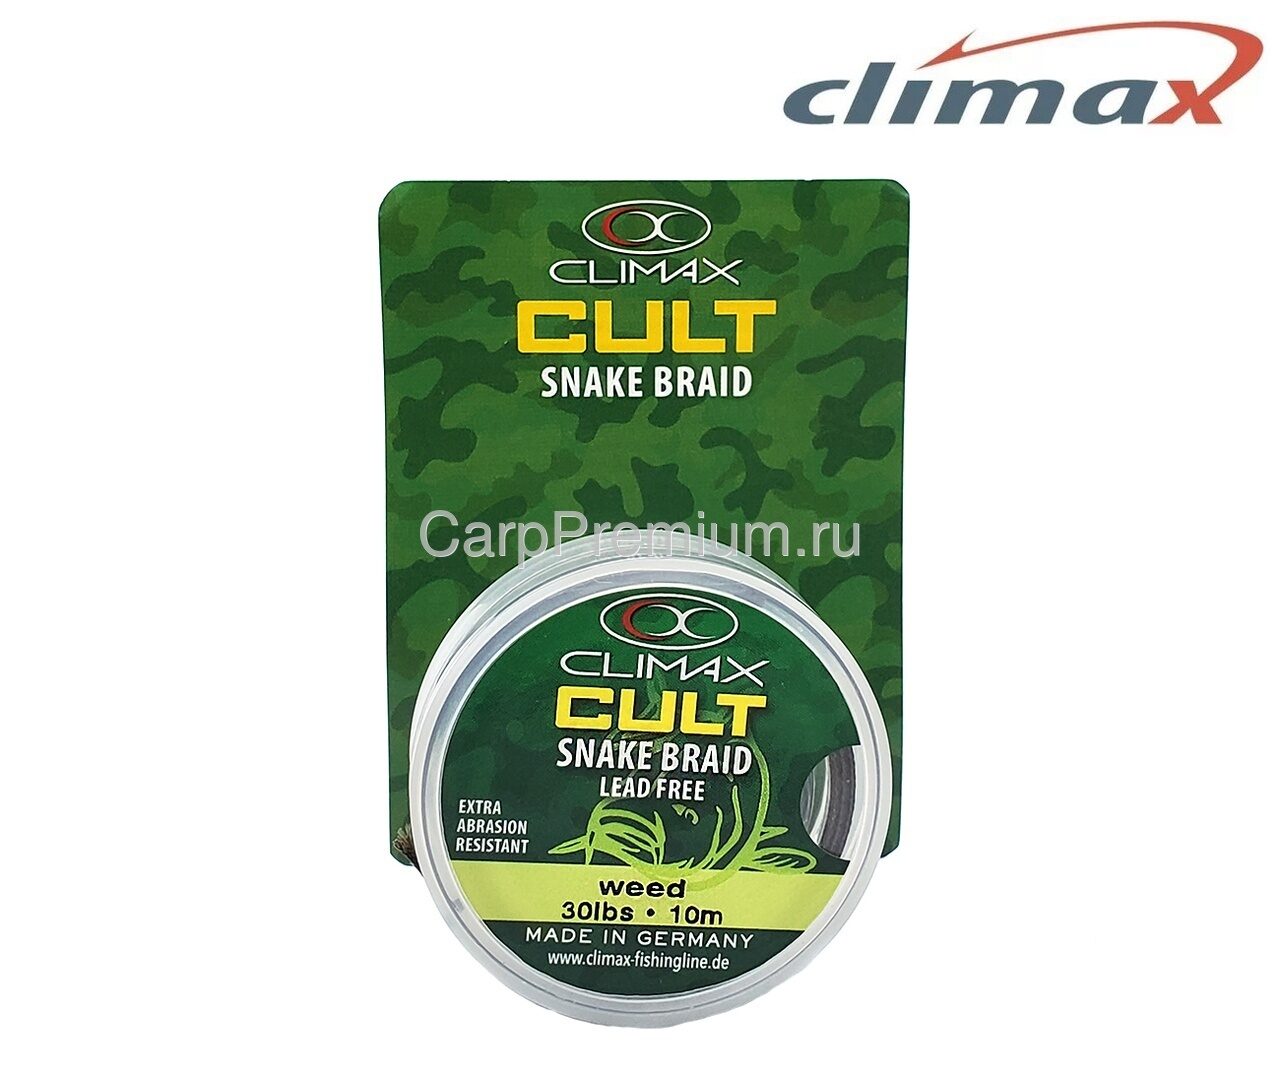 Лидкор без свинцового сердечника Зеленый Сlimax (Клаймакс) - CULT SnakeBraid Weed 14.5 кг / 30 lb, 10 м